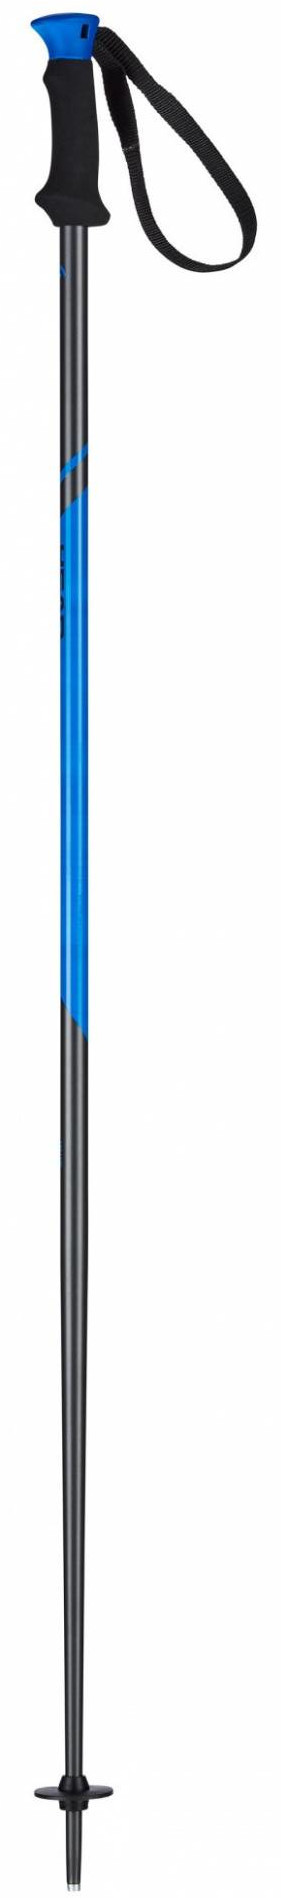 Палки горнолыжные Head Multi S anthracite/neon blue (2020) 